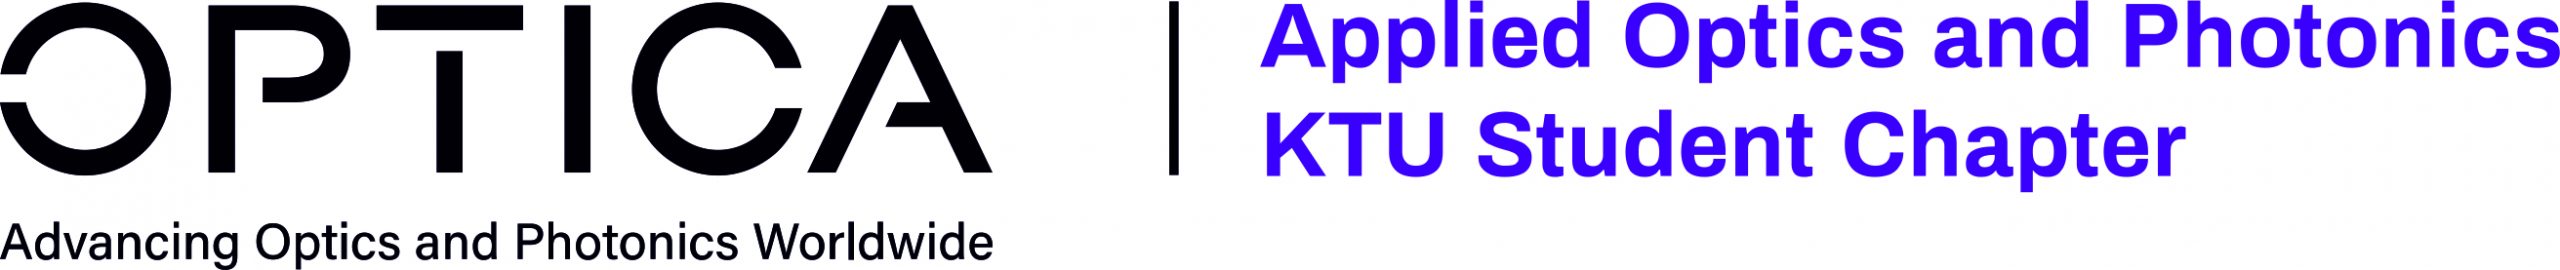 Applied Optics and Photonics KTU Student Chapter Logo